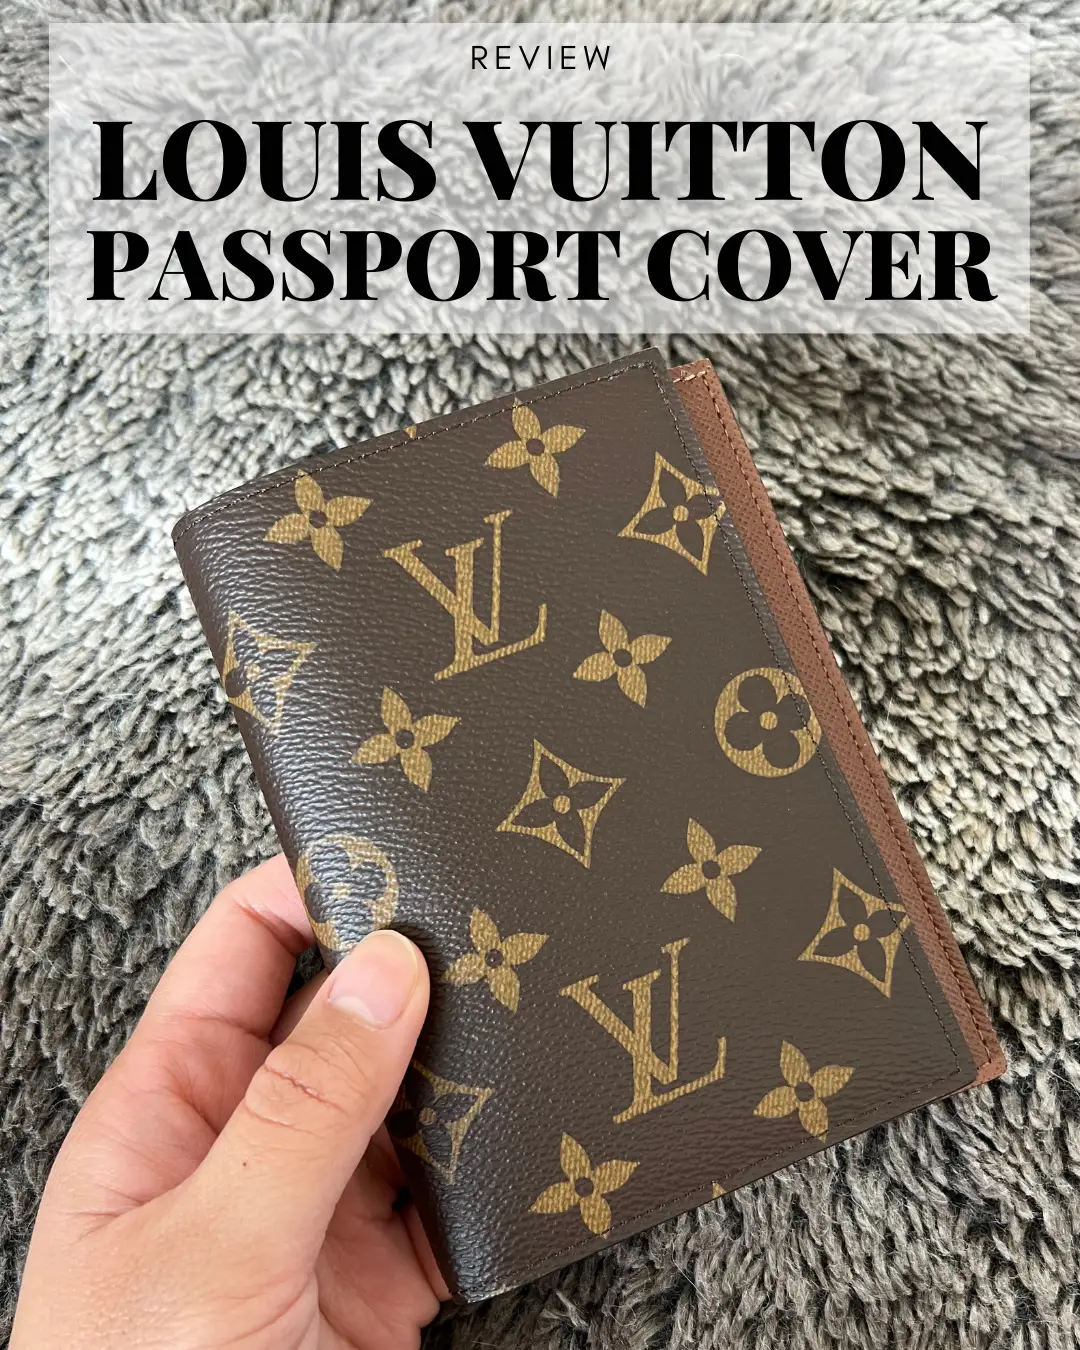 LOUIS VUITTON  PASSPORT COVER REVIEW 